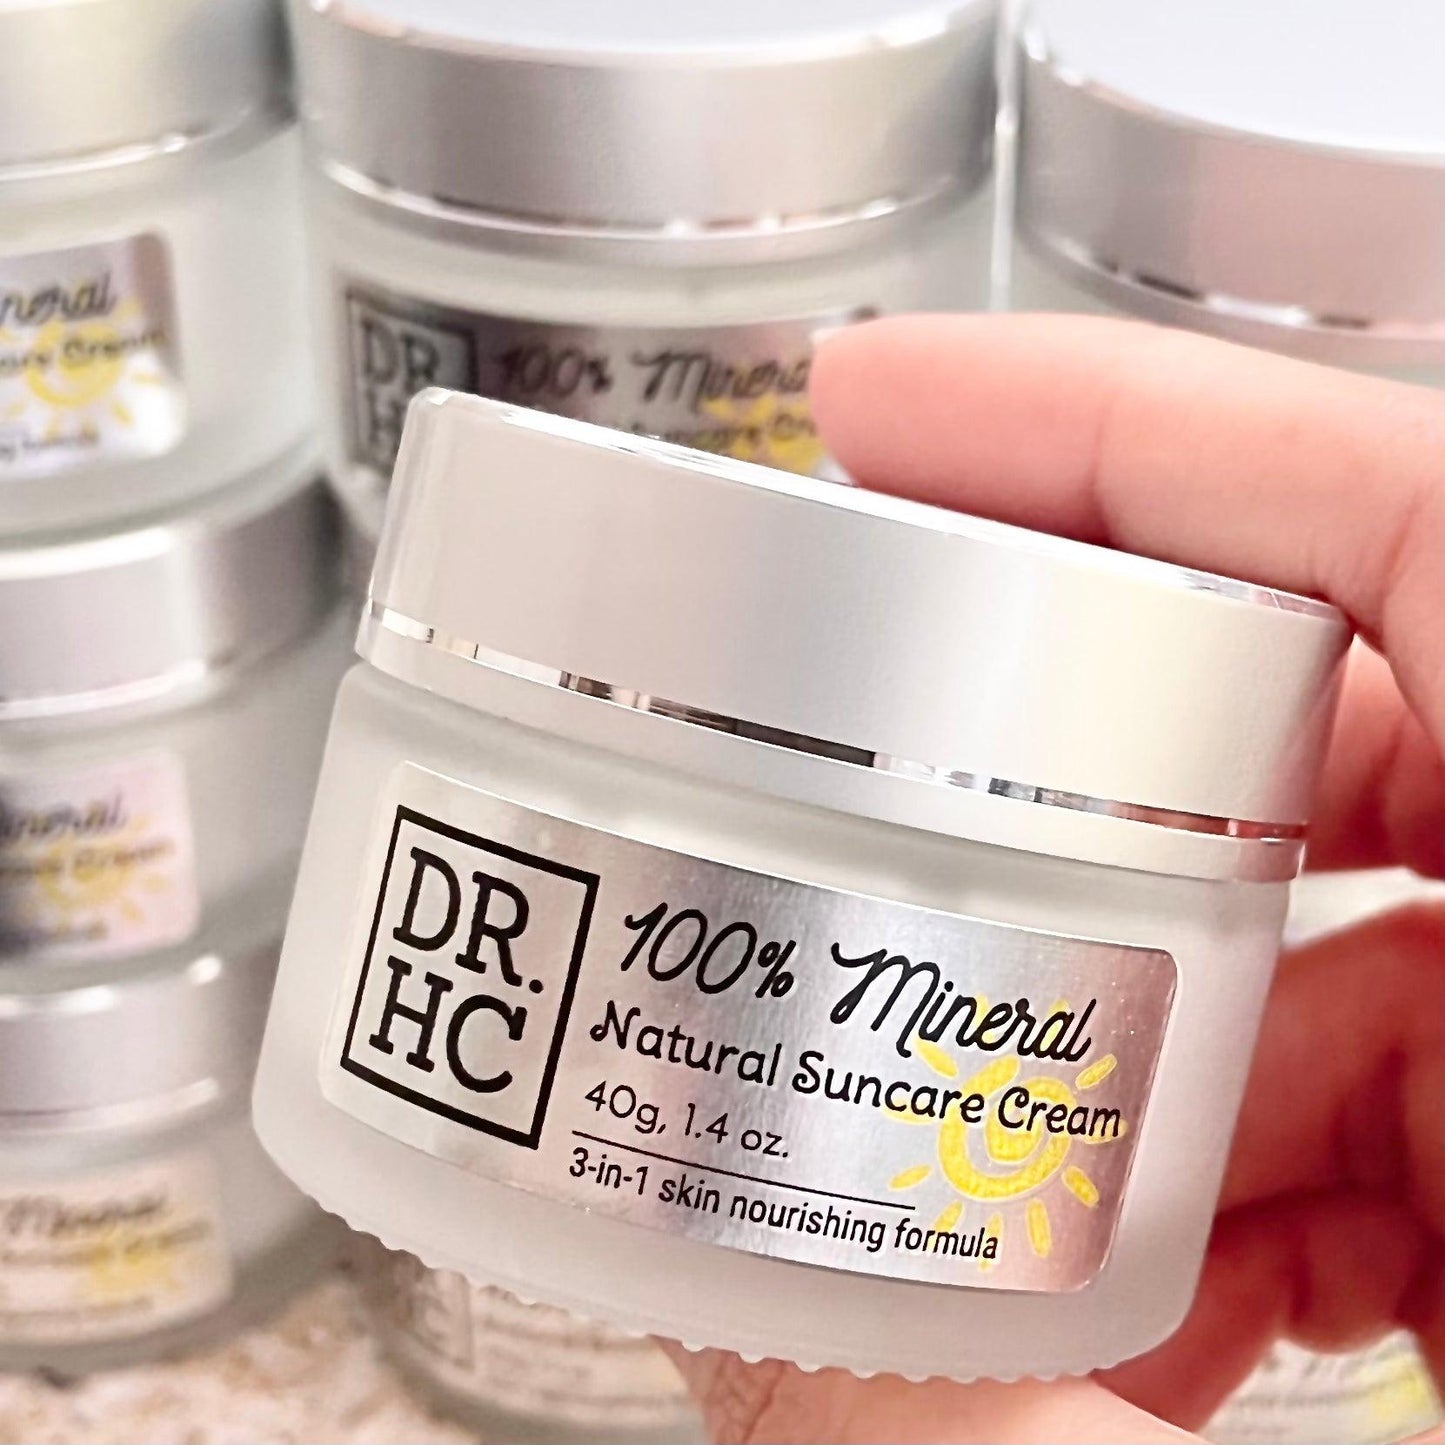 DR.HC 100% Mineral Natural Suncare Cream (40g, 1.4oz.) (Natural UV Care, Skin brightening, Anti-aging, Damage Repair, Anti-inflammatory...)